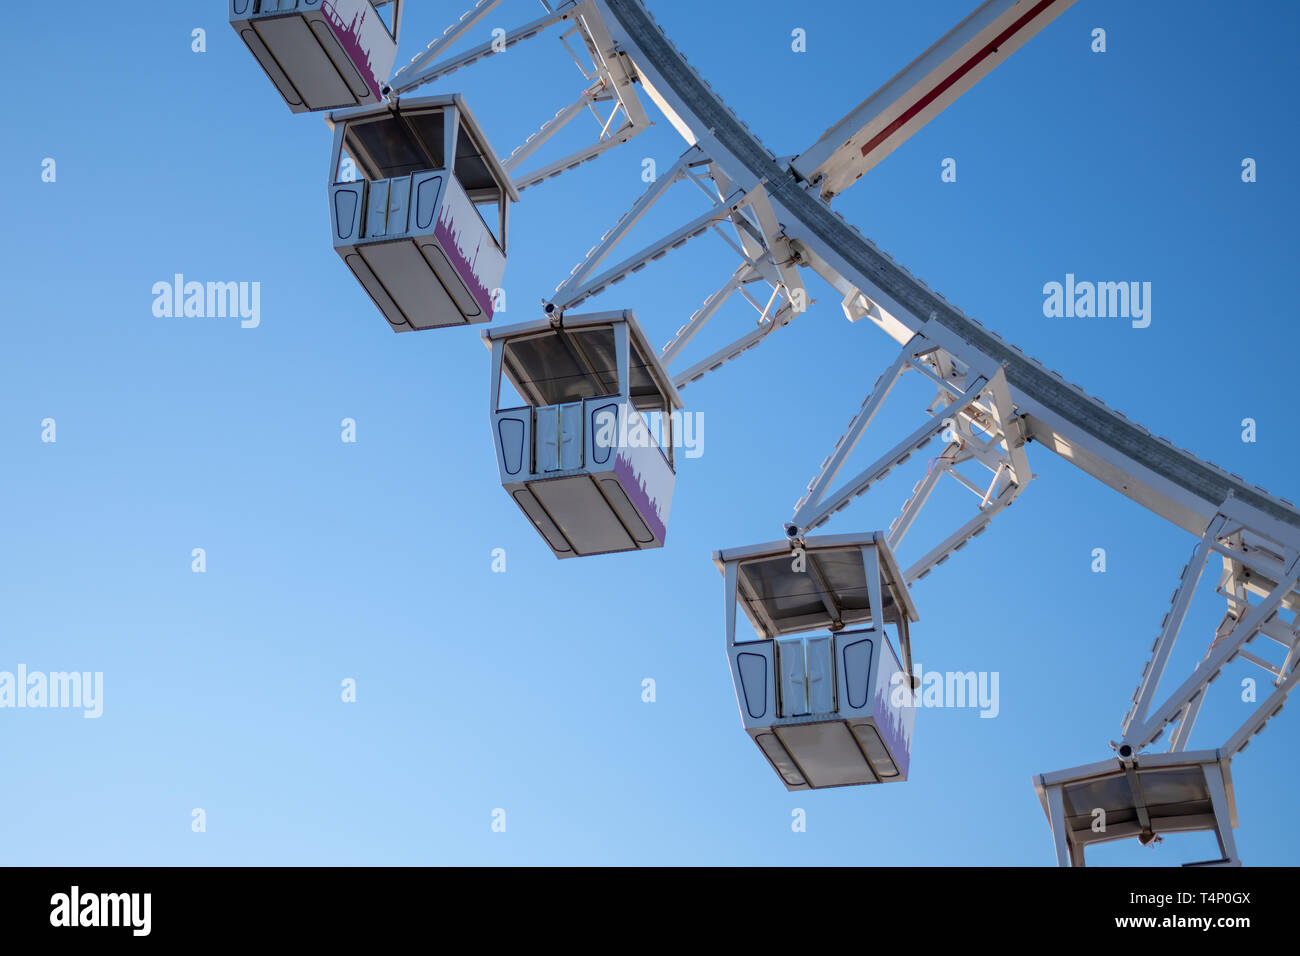 Ferris wheel in the sky Stock Photo